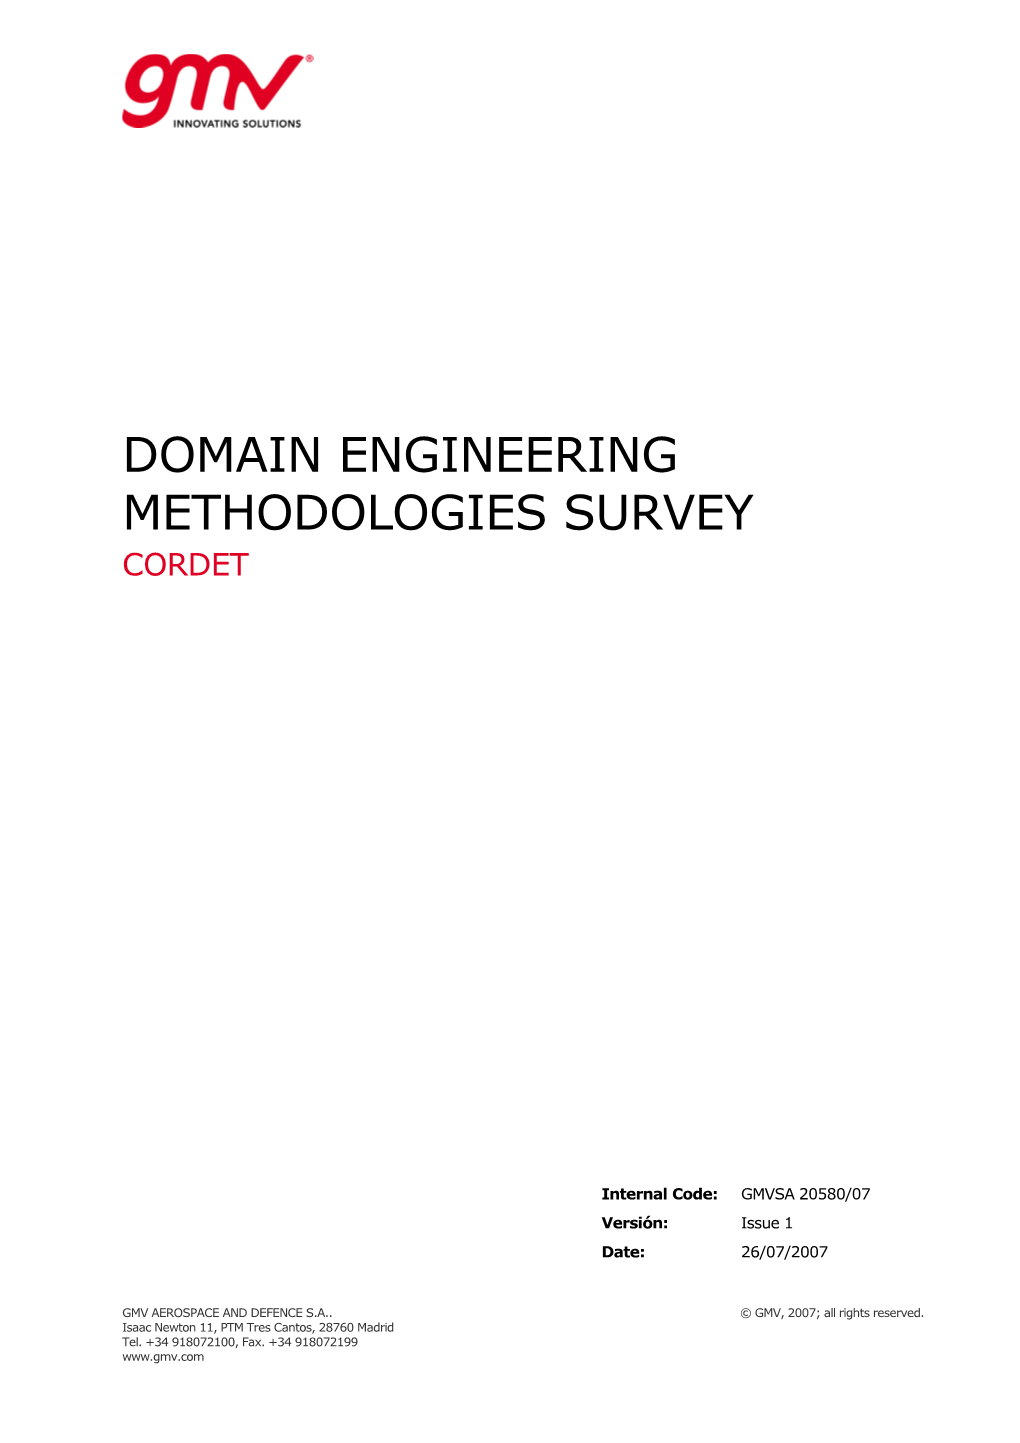 Domain Engineering Methodologies Survey Cordet